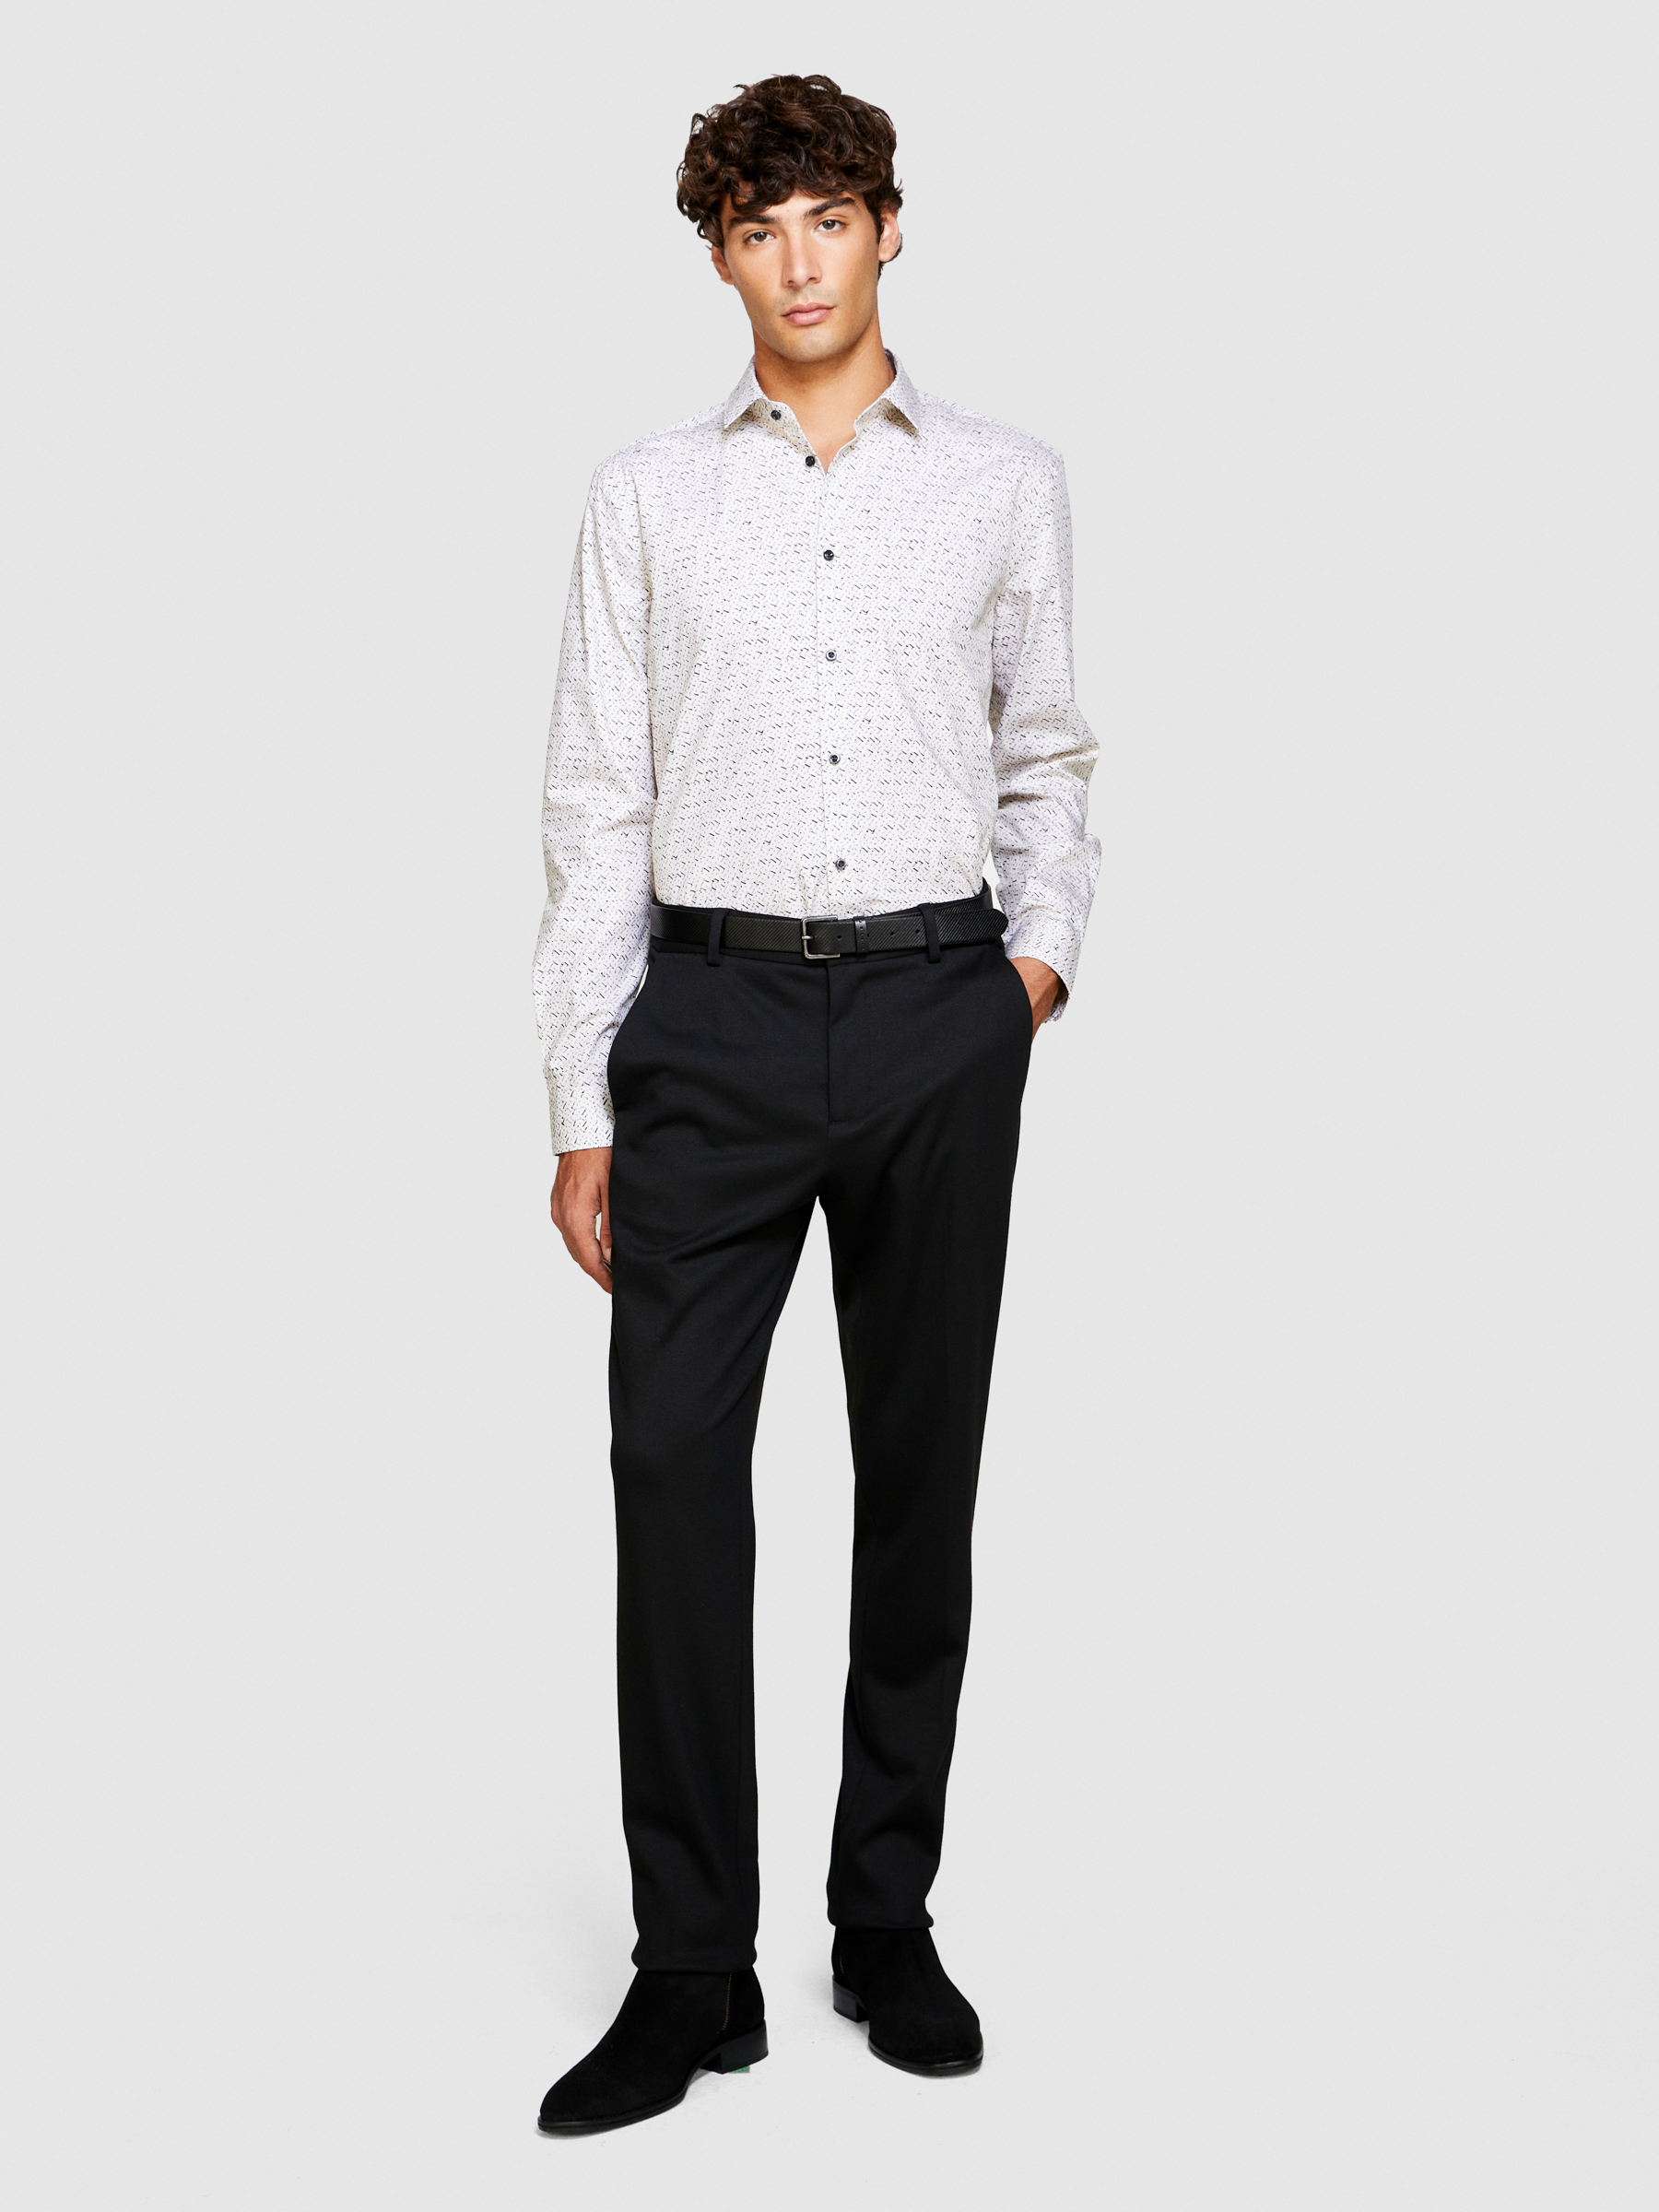 Sisley - Slim Fit Printed Shirt, Man, Creamy White, Size: 43